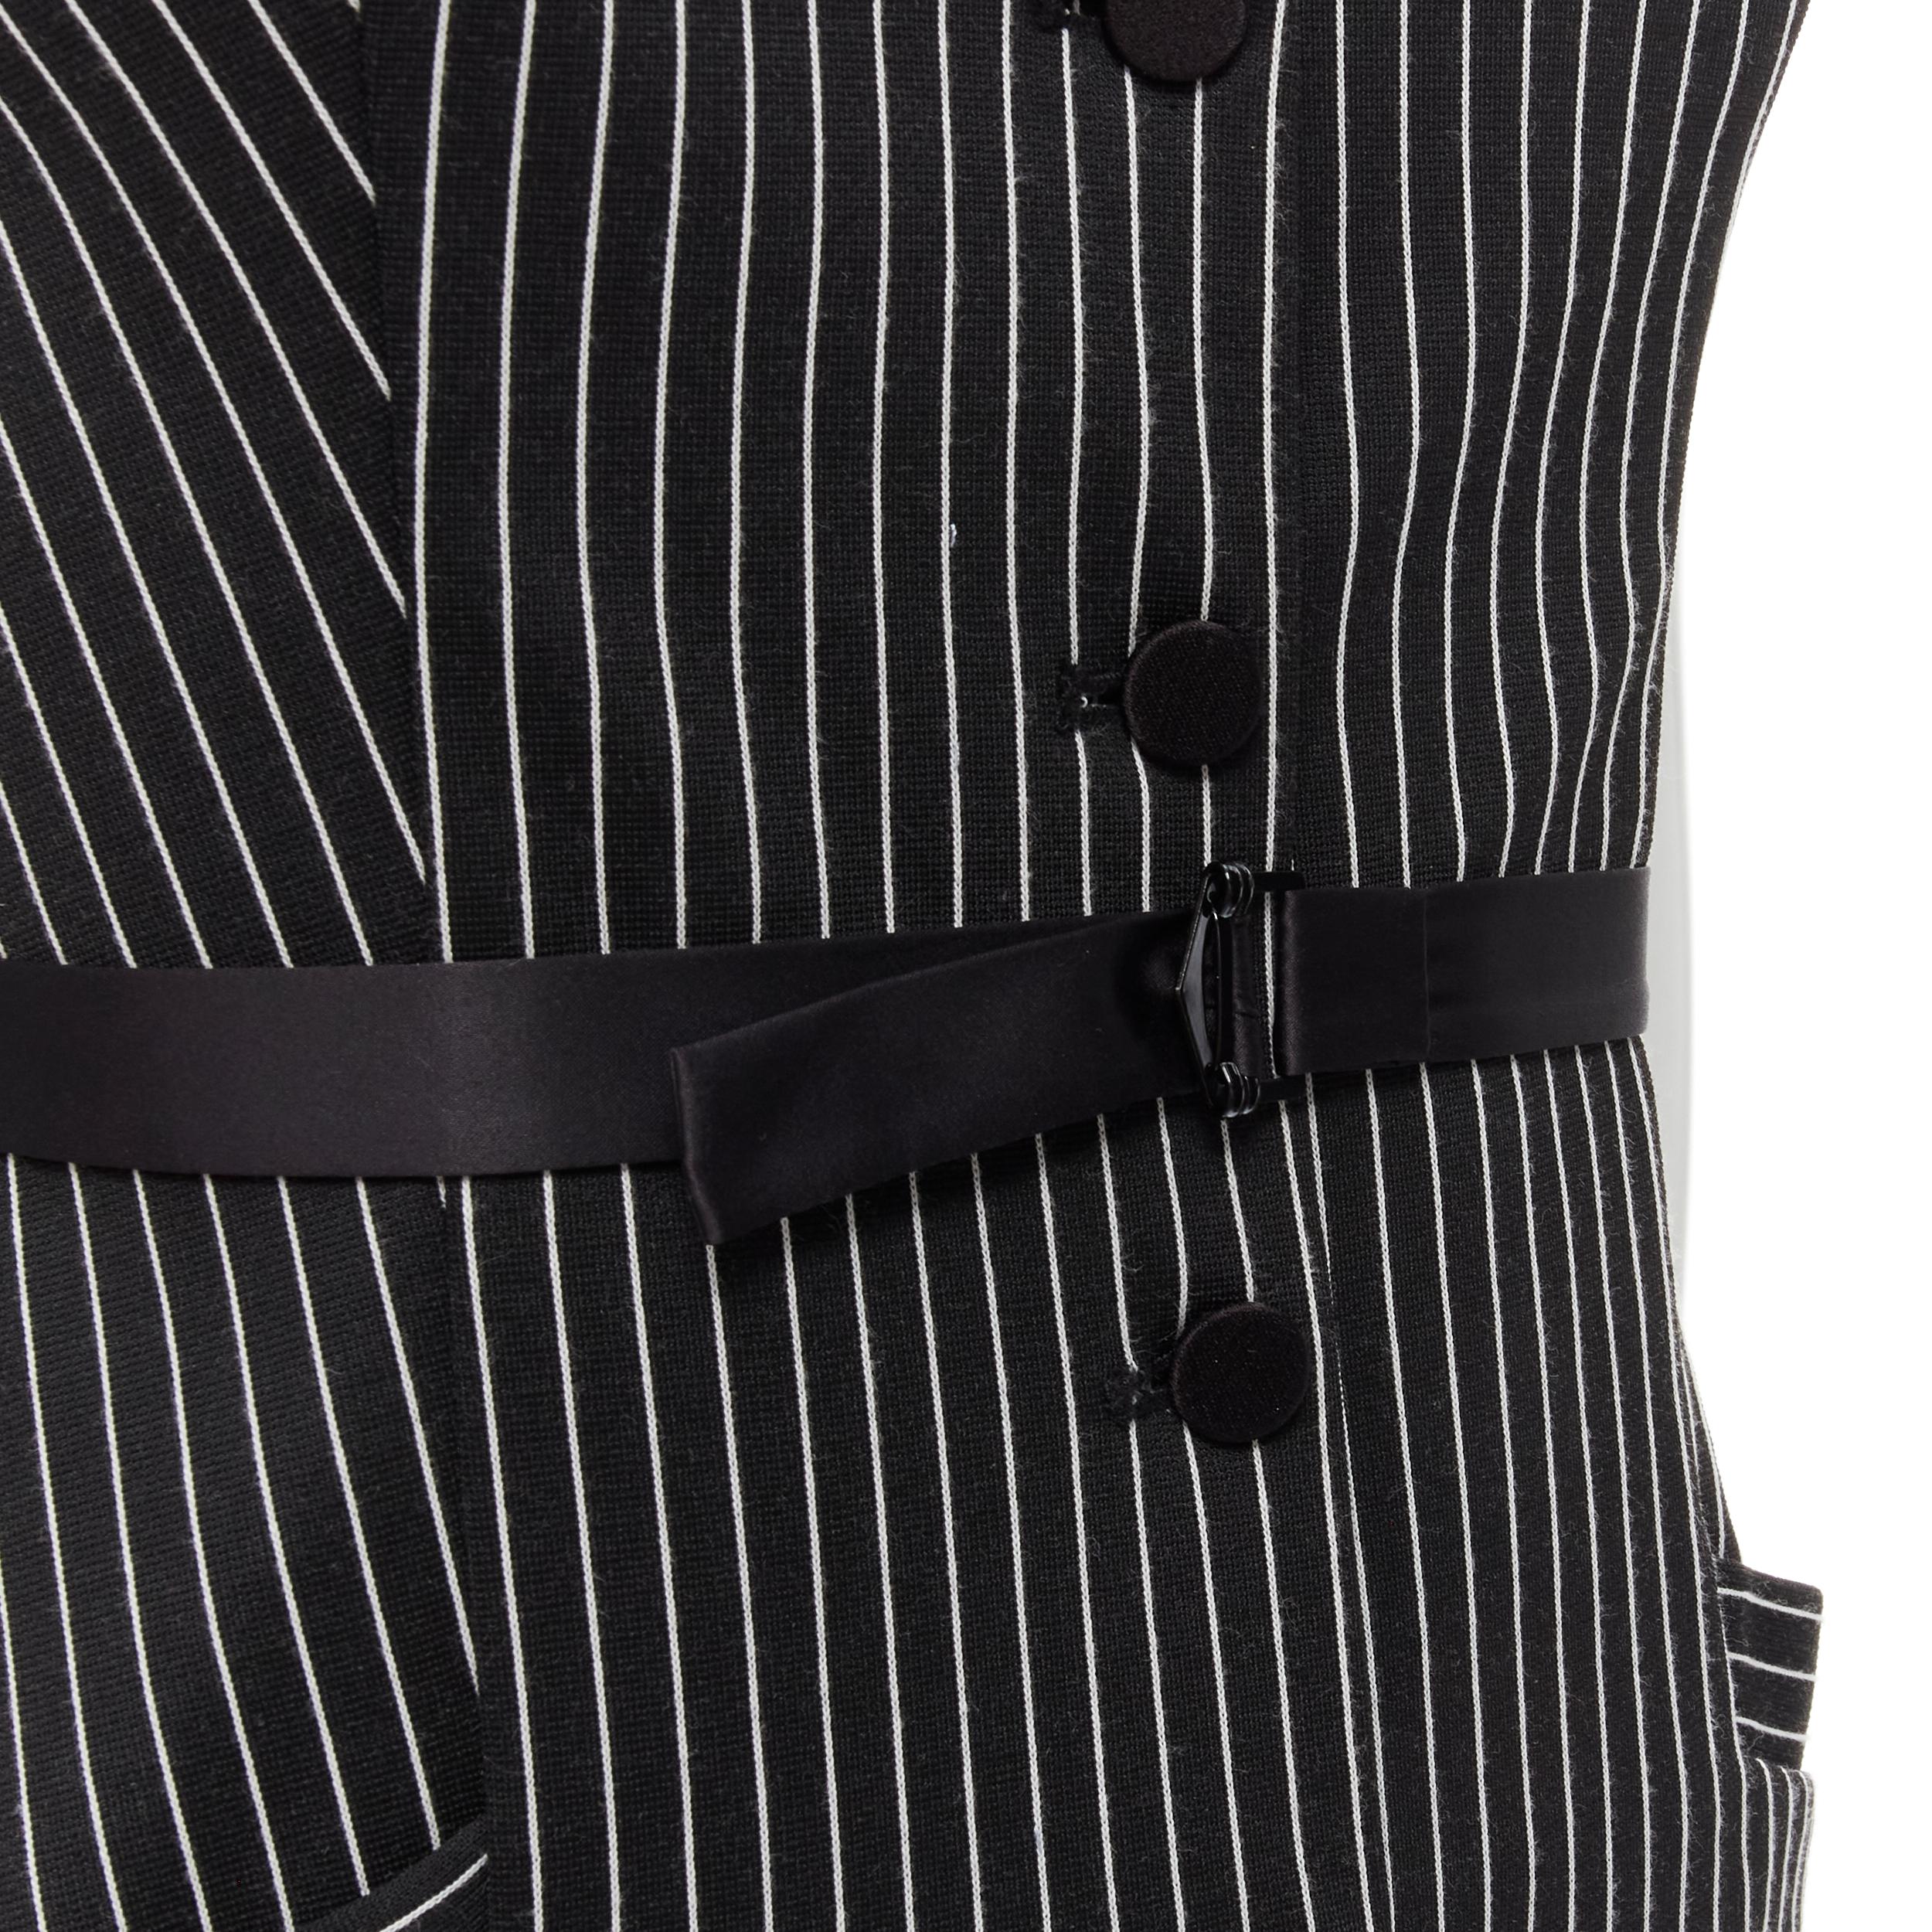 DIANE VON FURSTENBERG Gilet Dress black white vertical pinstripes dress US0 XS For Sale 3